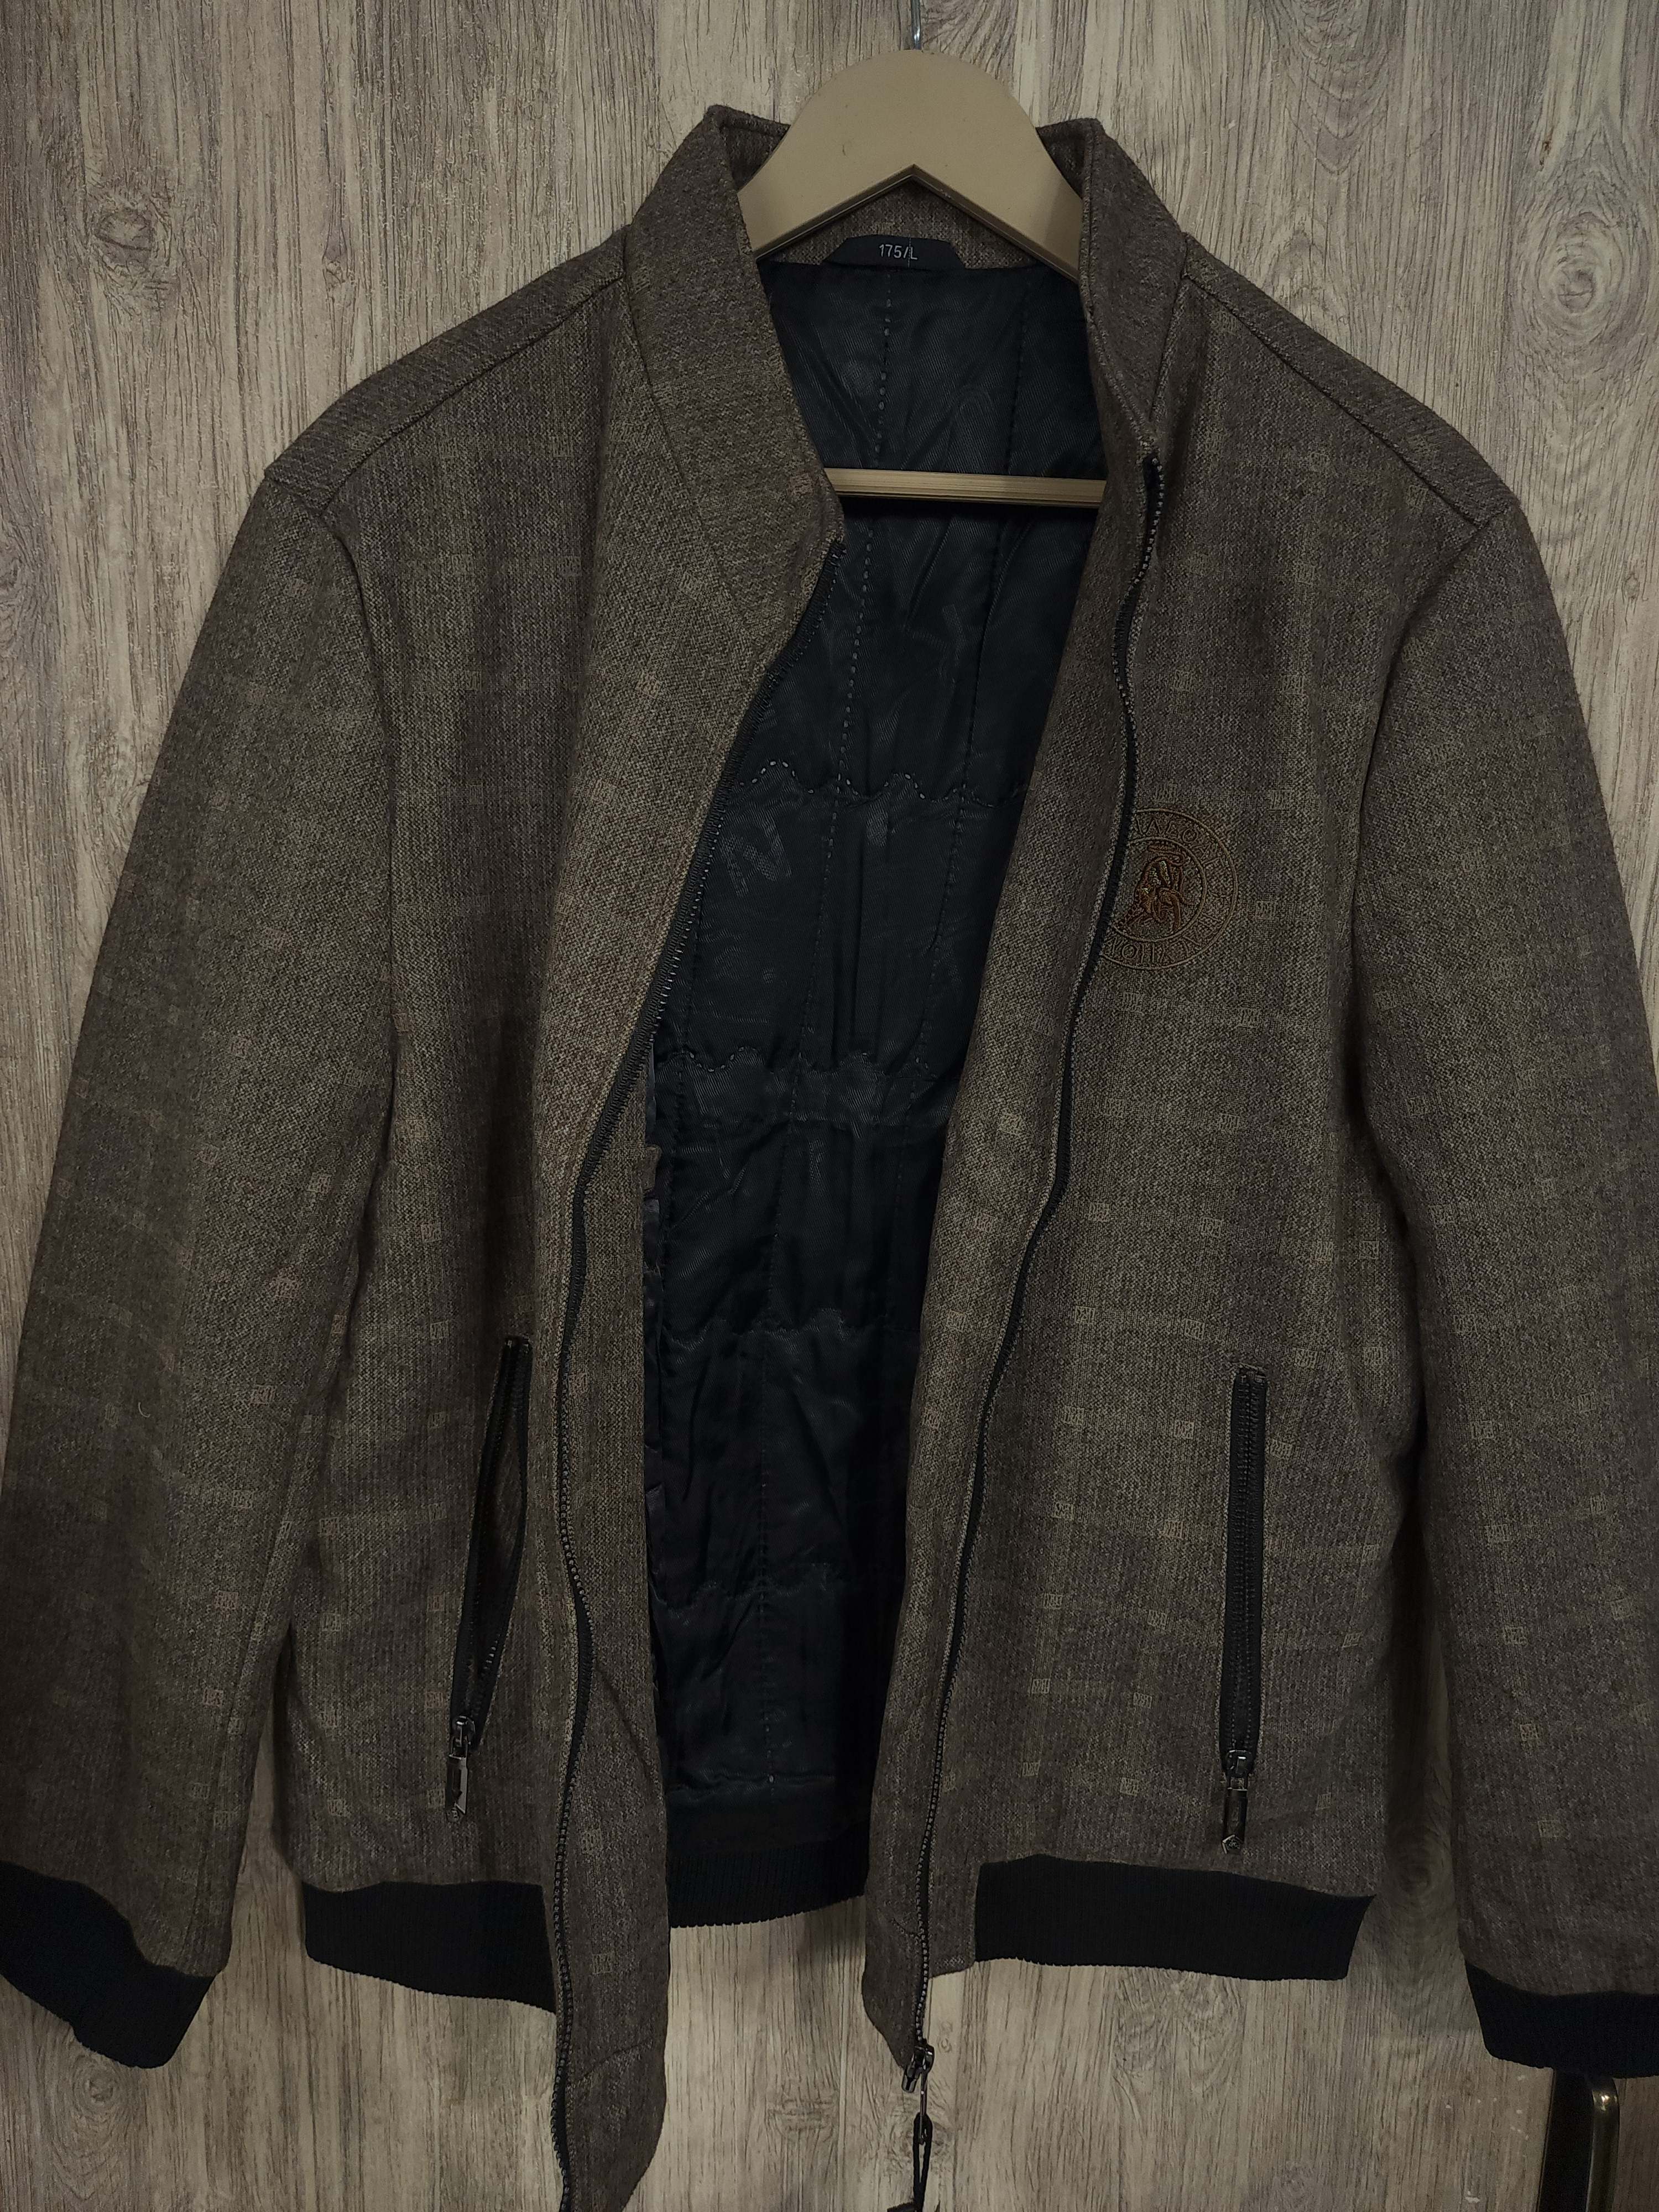 Beige Men Woolen Jacket - Maha fashions -  Men Clothing